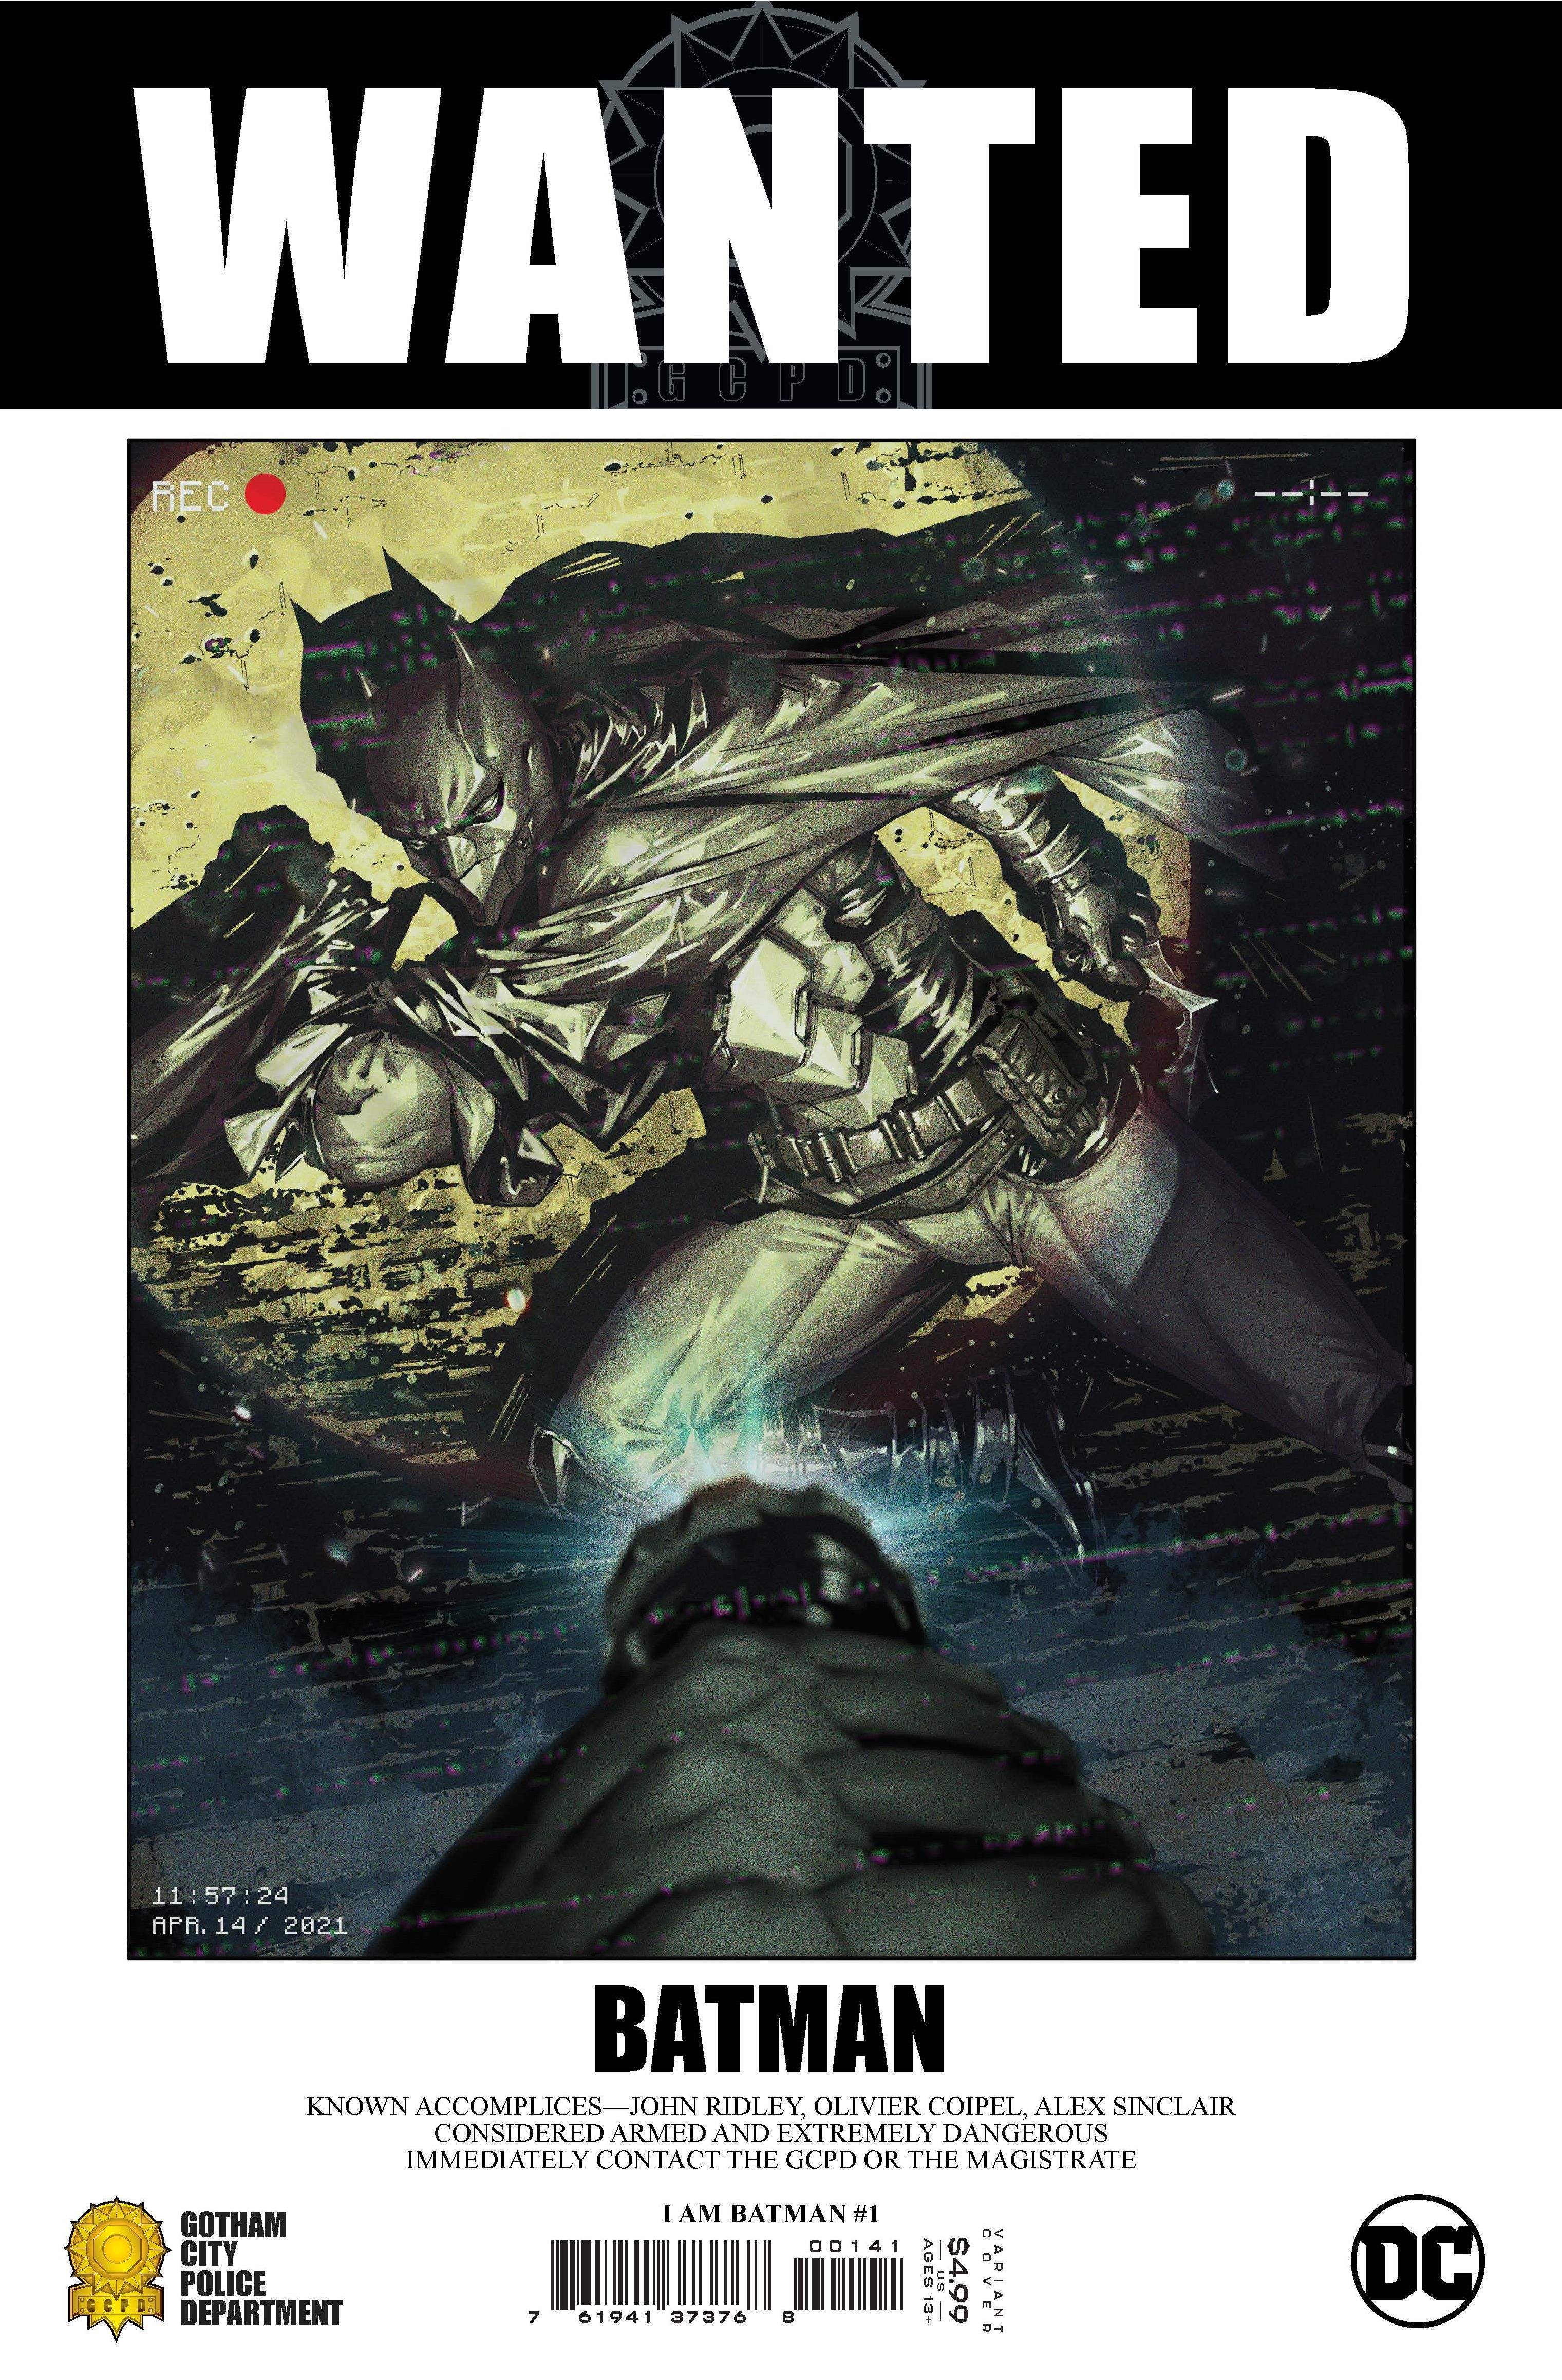 Kael Ngu 1 in 25 card stock variant cover to I Am Batman #1